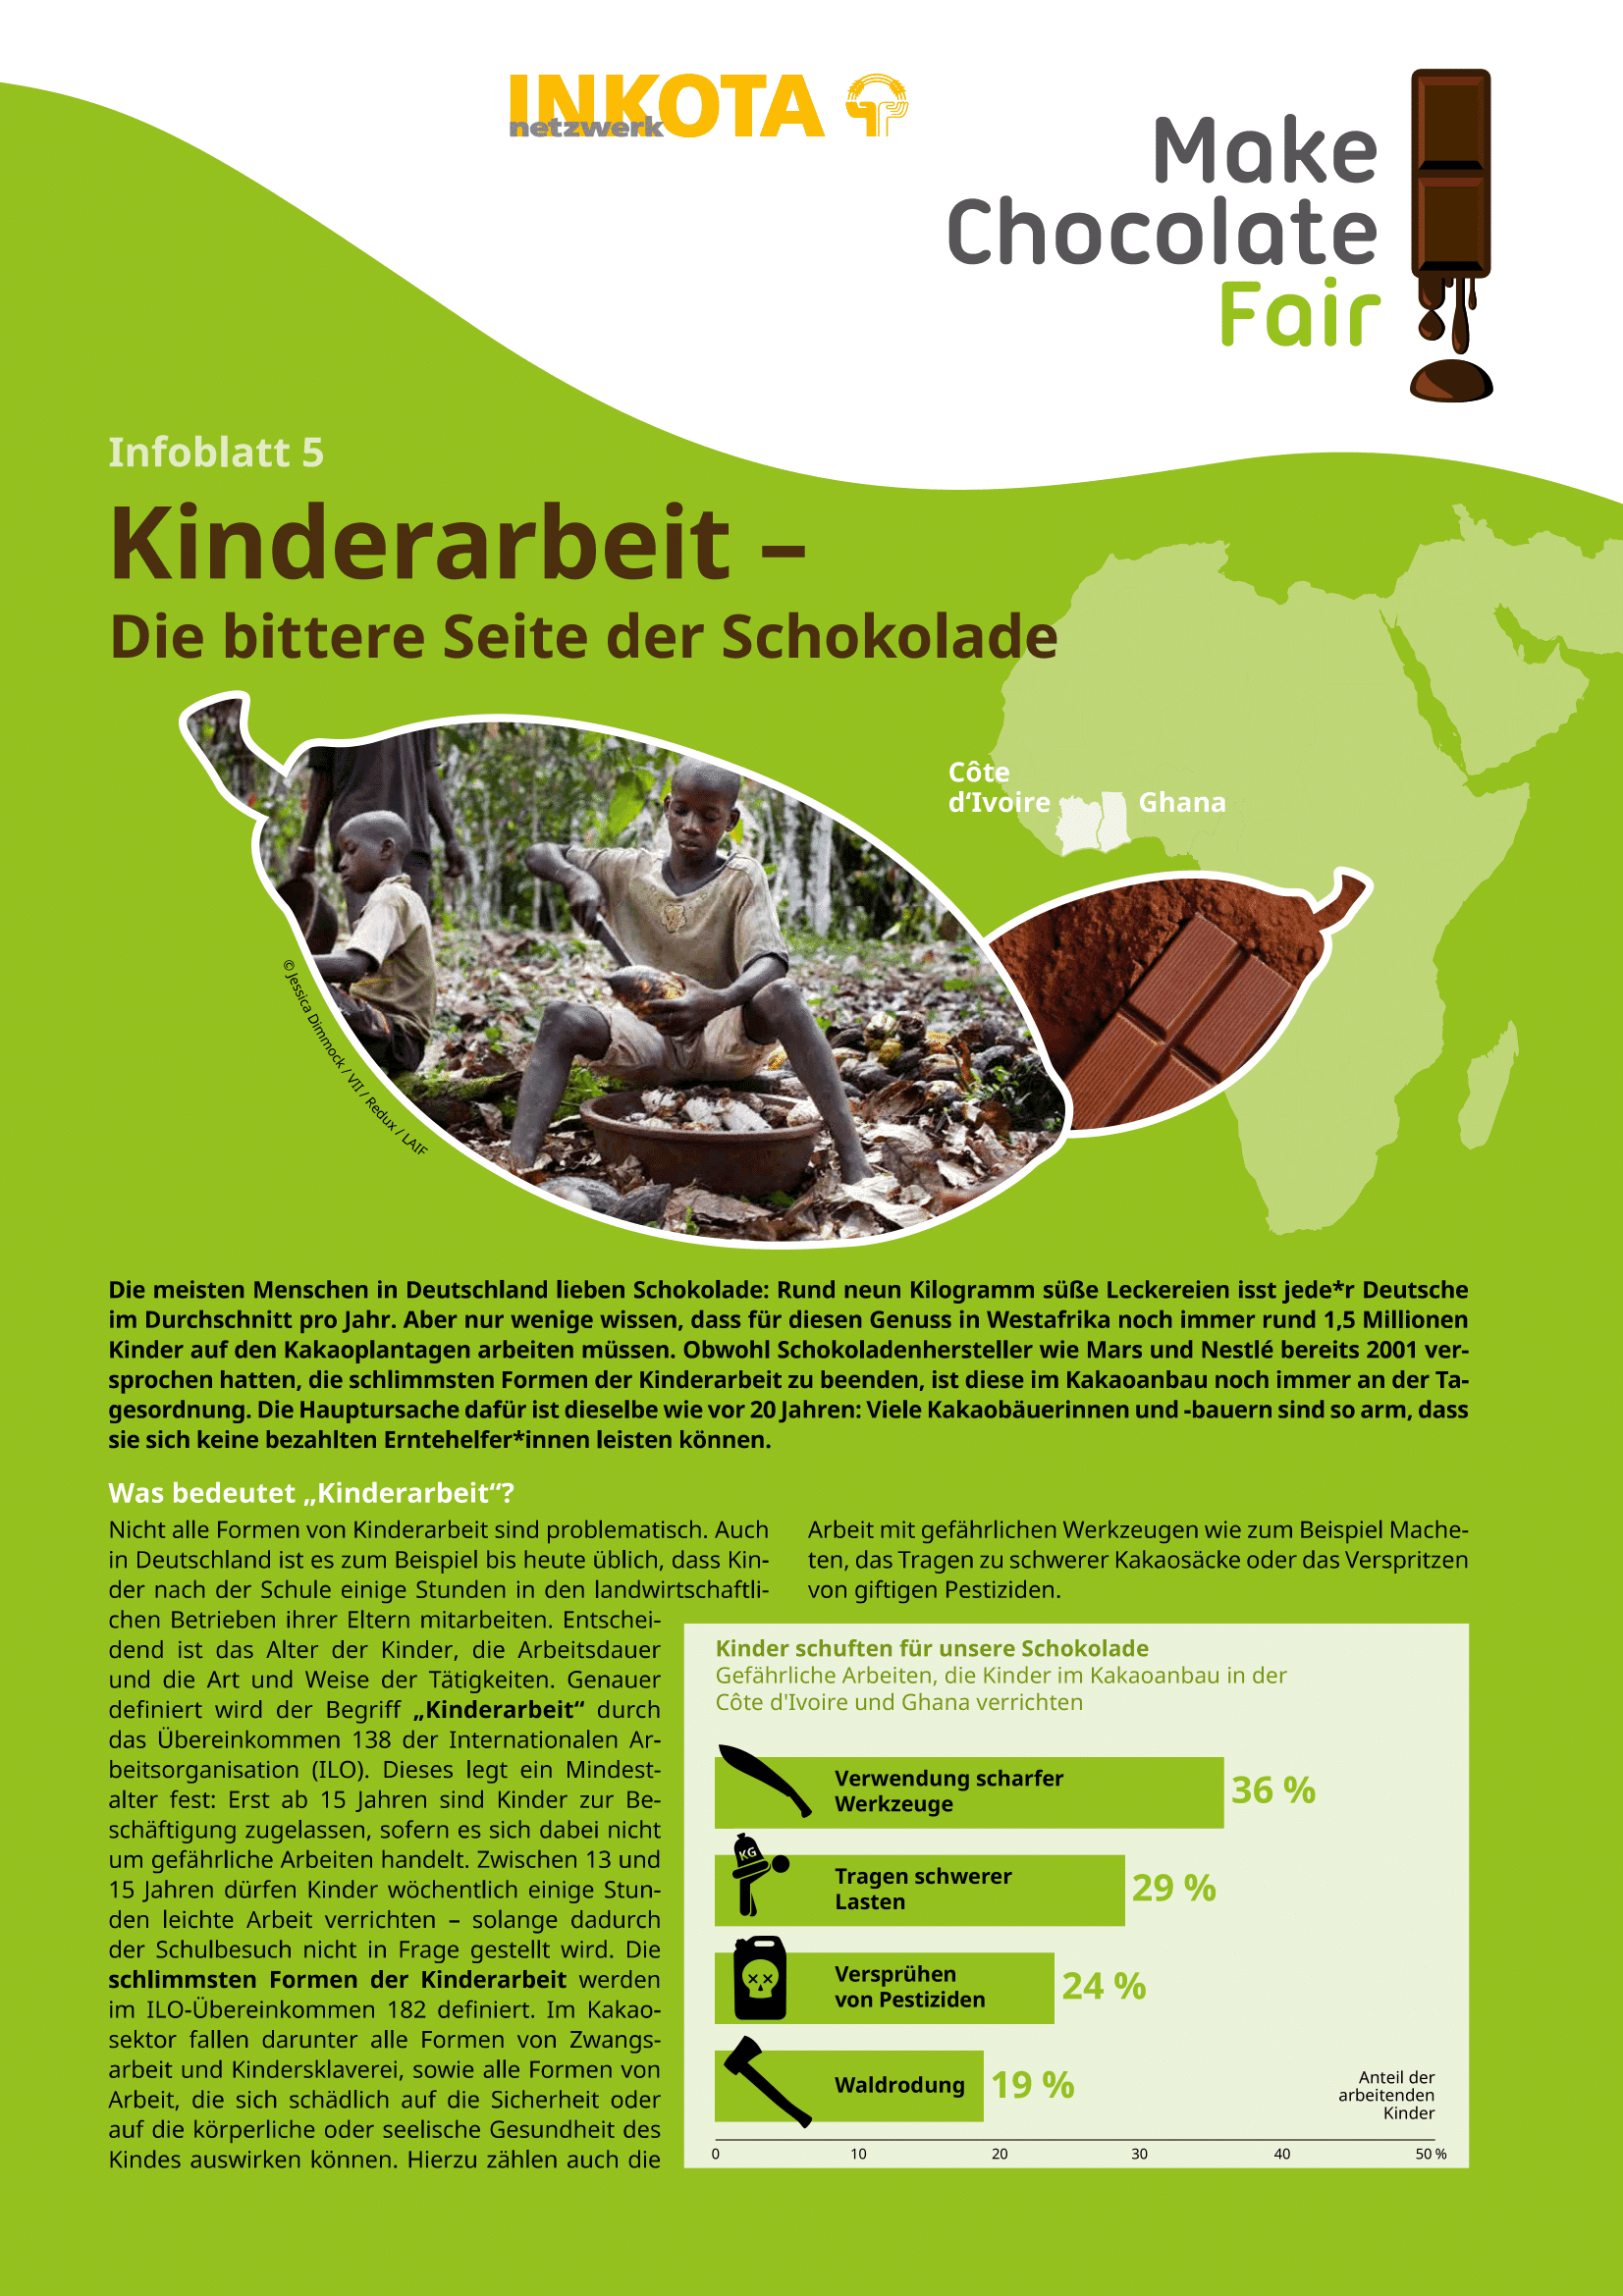 Infoblatt Kinderarbeit Schokolade Inkota cover